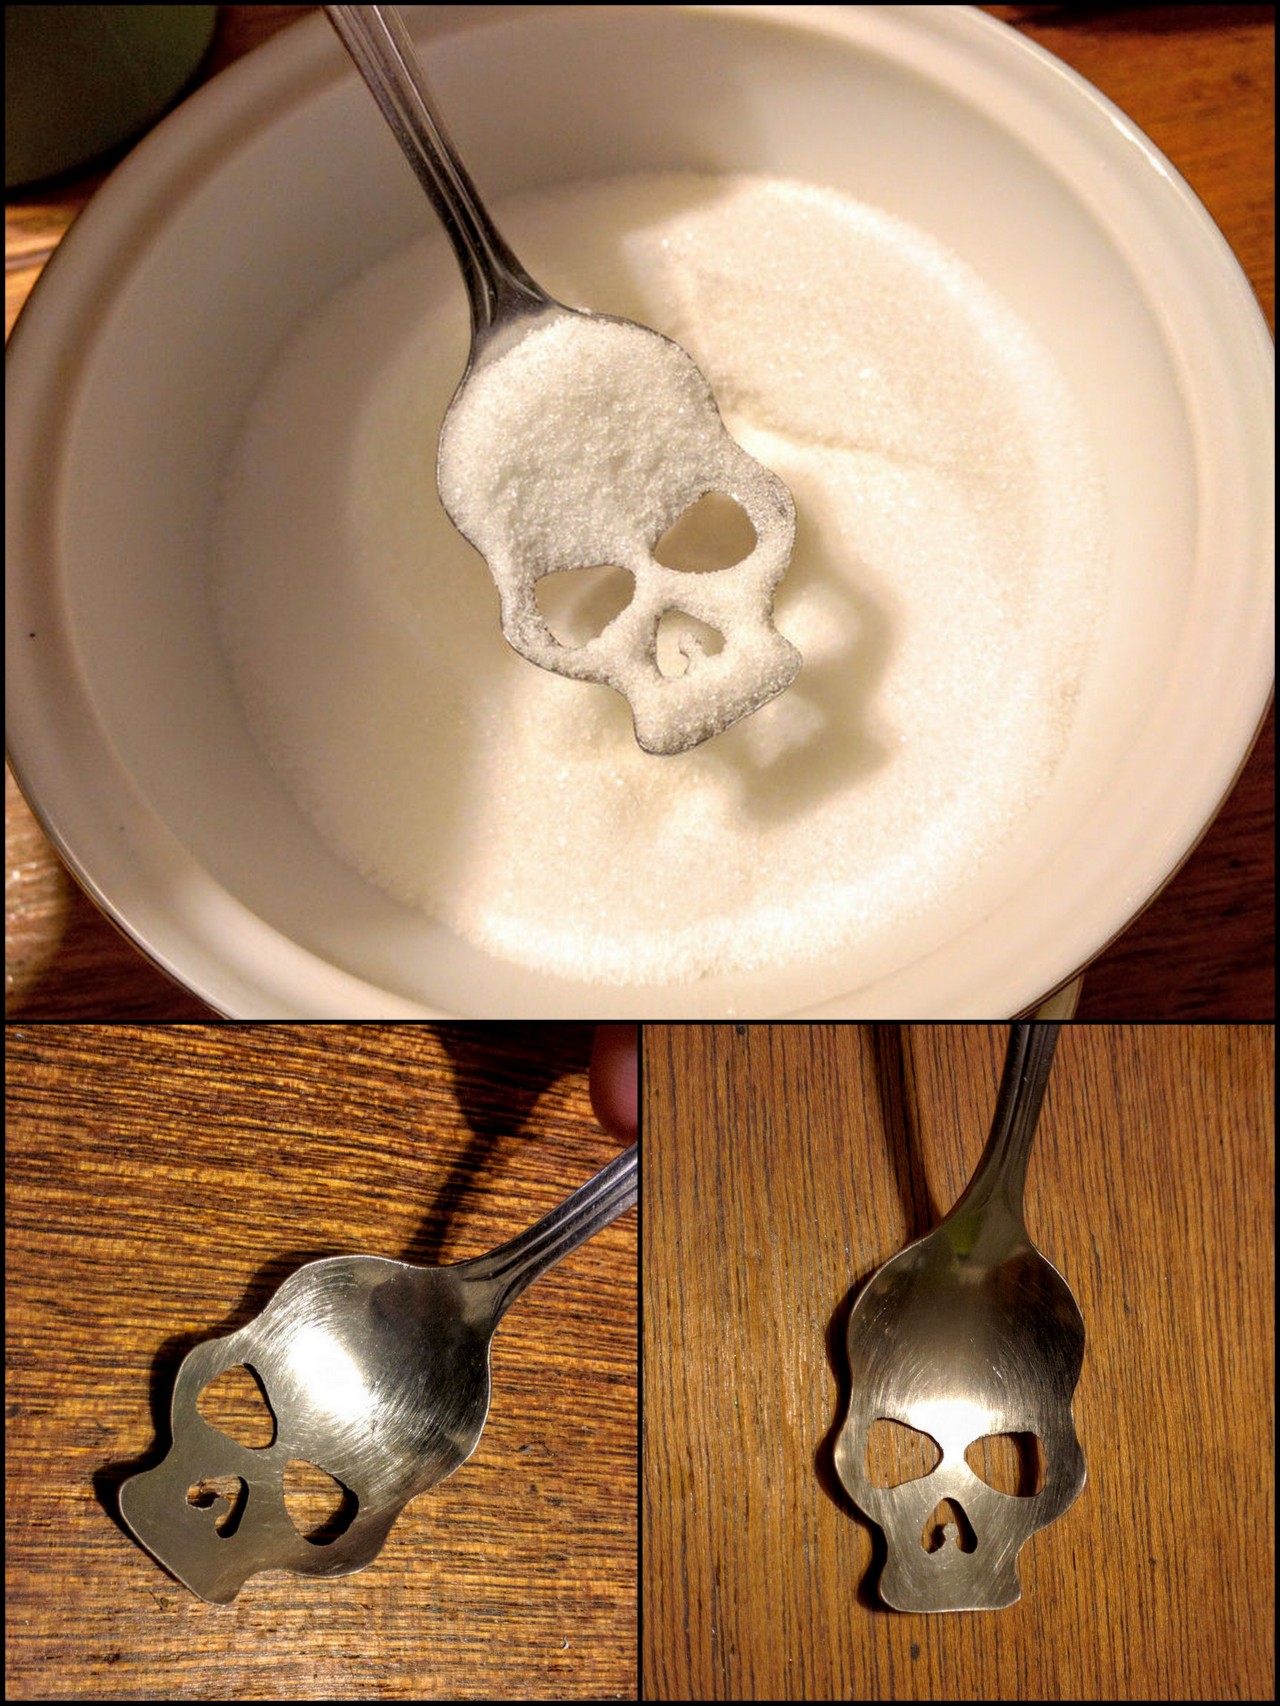 halloweencrafts:  DIY Skull Spoon or Sugar Spoon of Death Tutorial from Instructables’